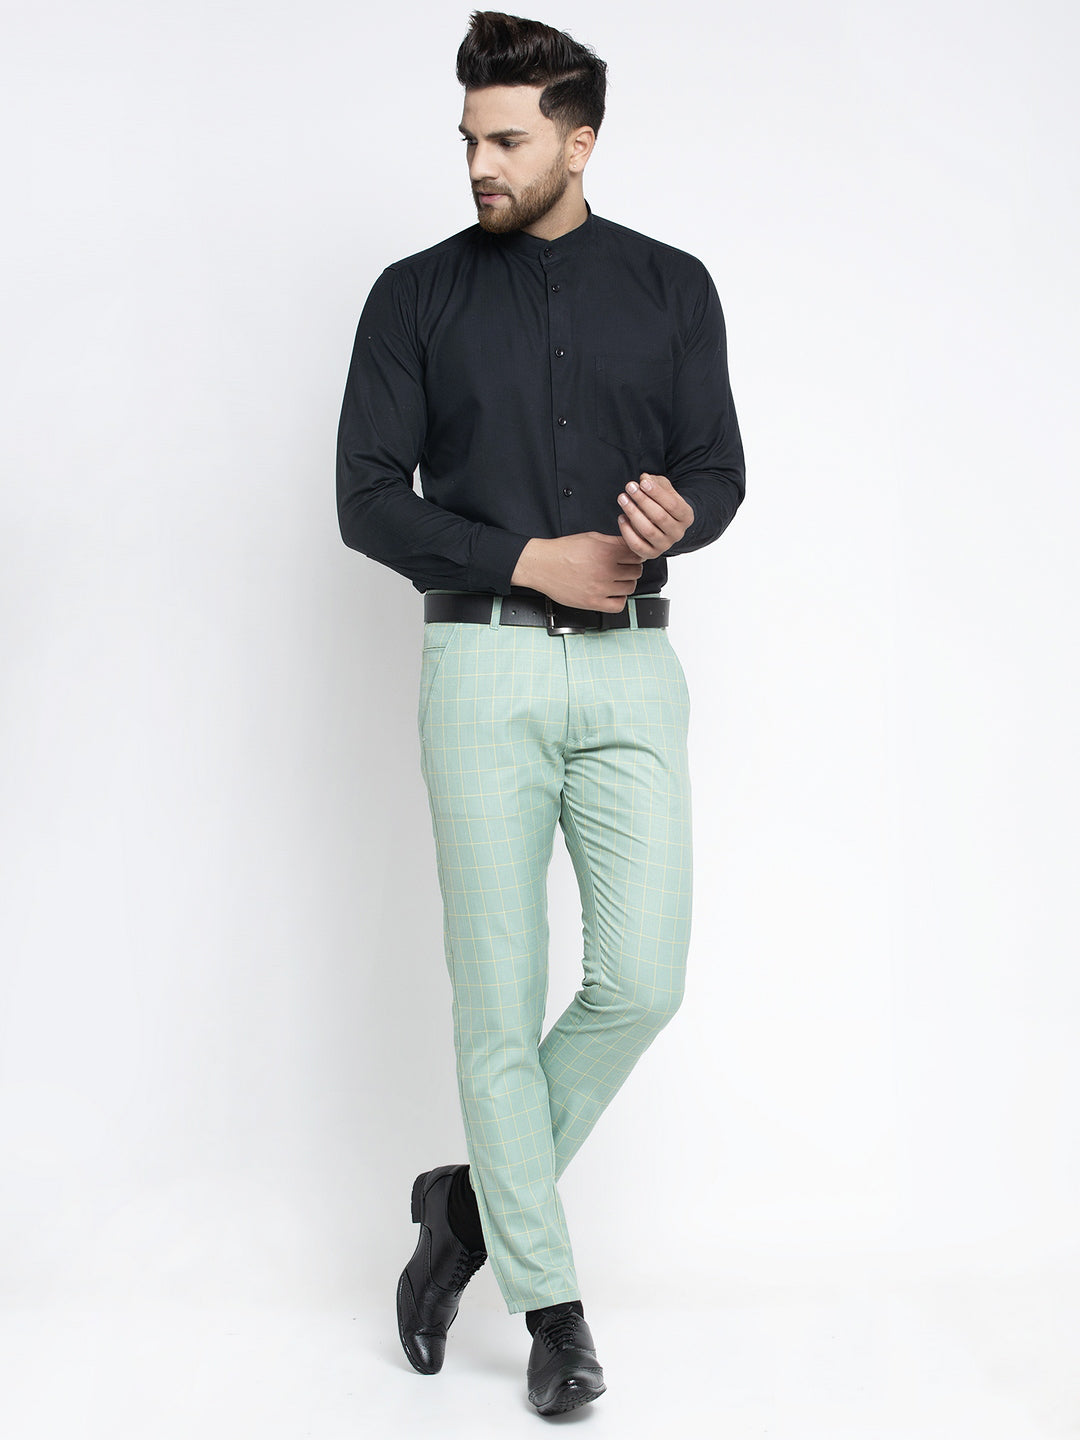 MANCREW Dark Green Dark Grey Formal Pants For Men  Formal Wear Trousers  combo